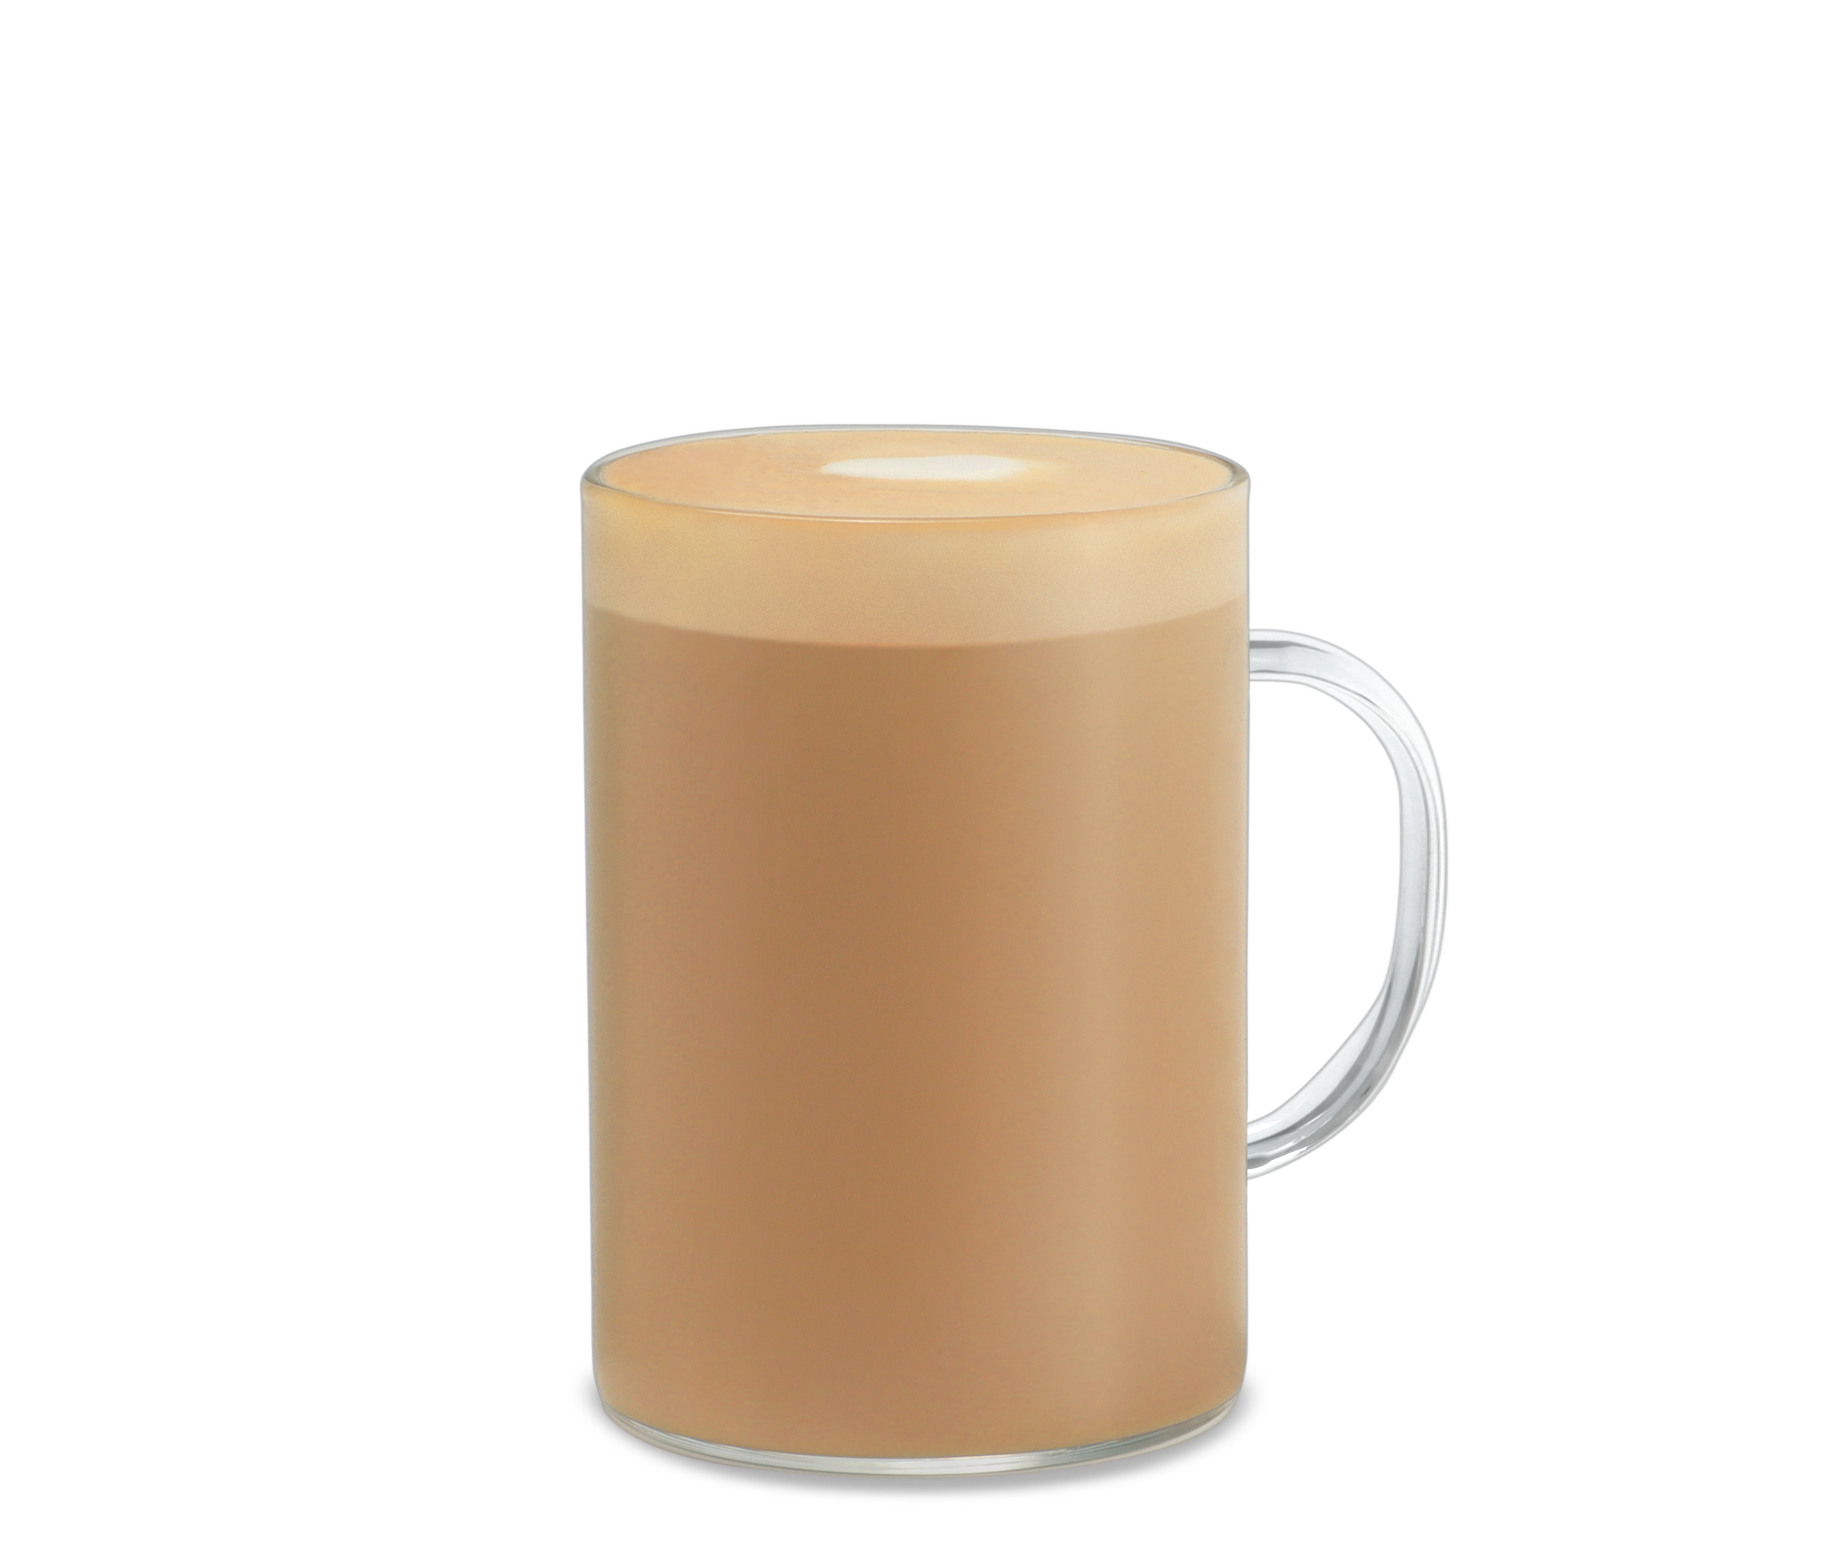 Honey Almond Flat White Coffee Cup